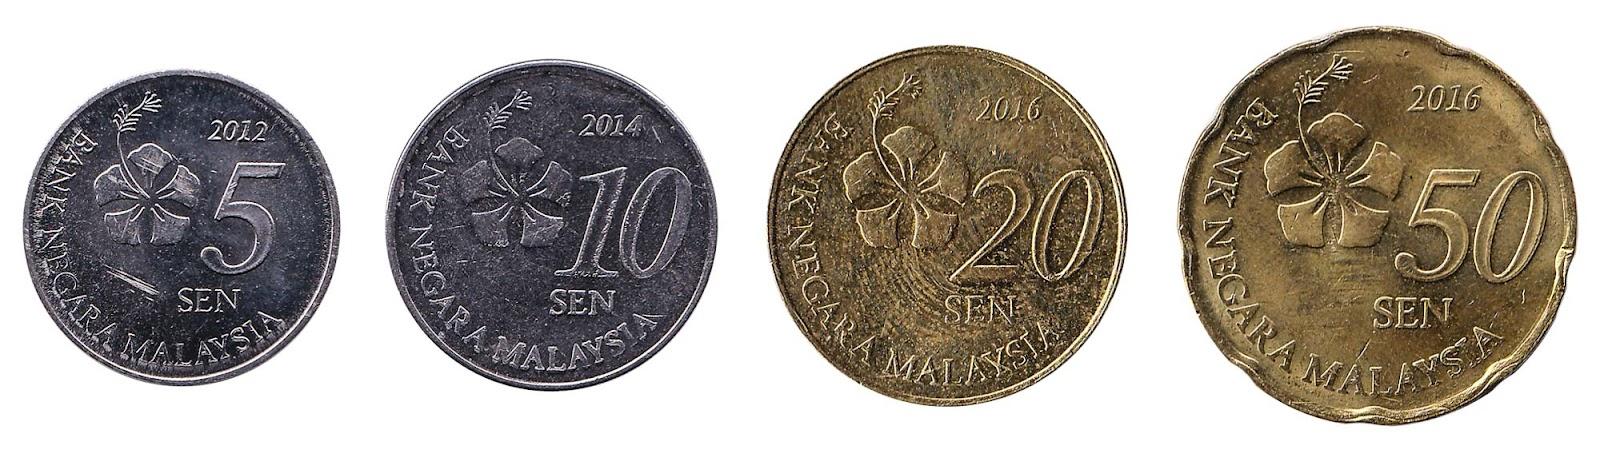 Malaysian Ringgit coin series